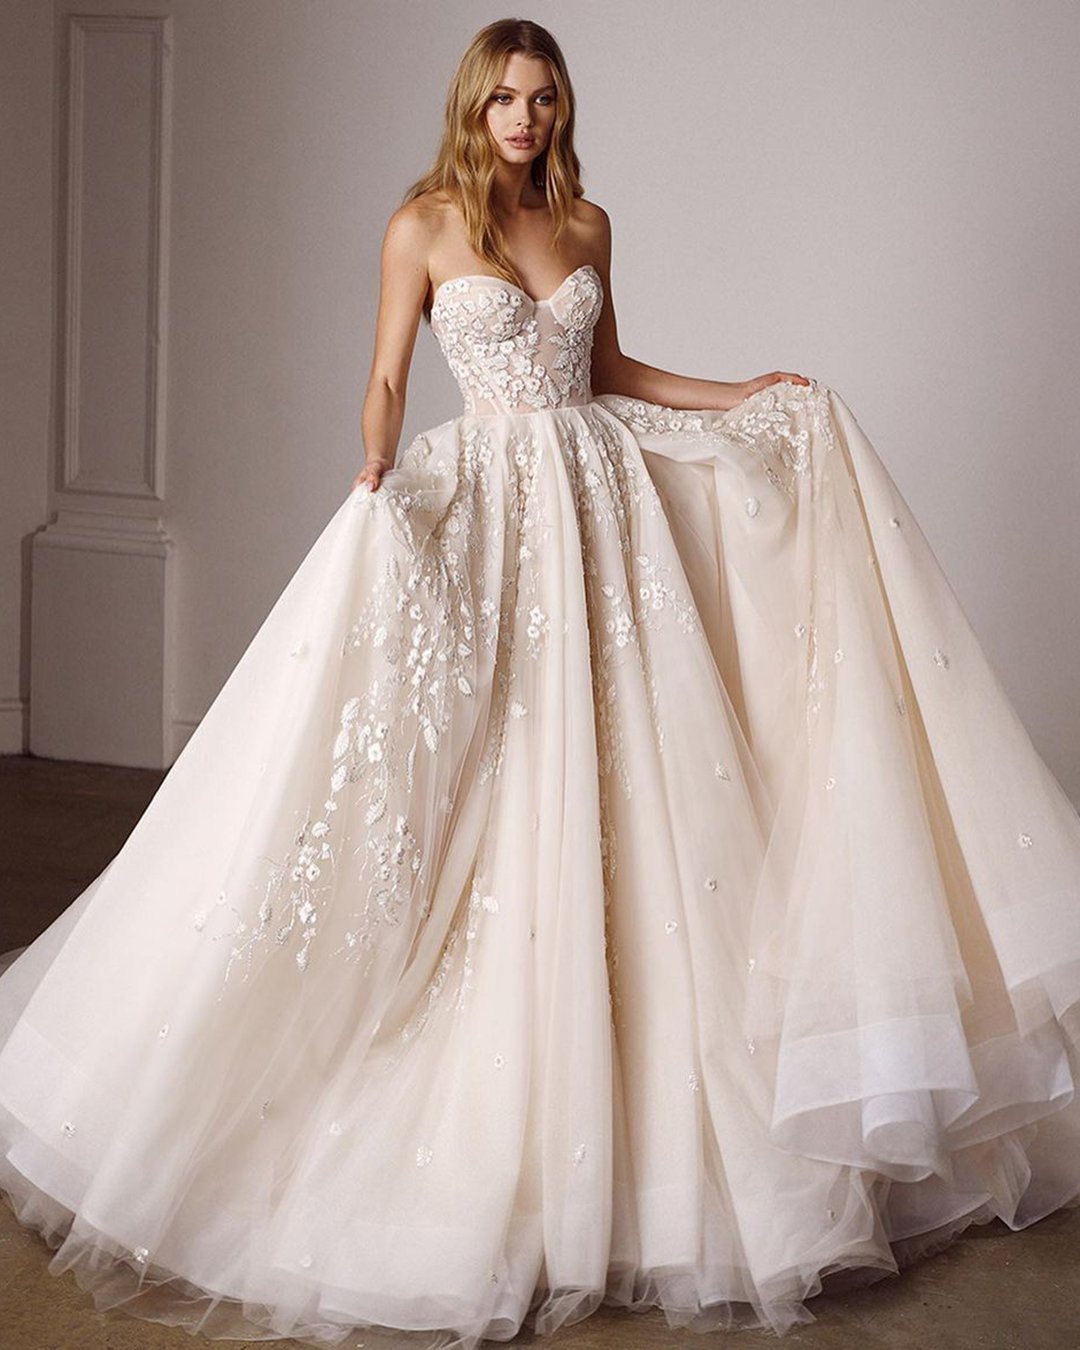 ball gown wedding dresses sweetheart neckline strapless lace galialahav